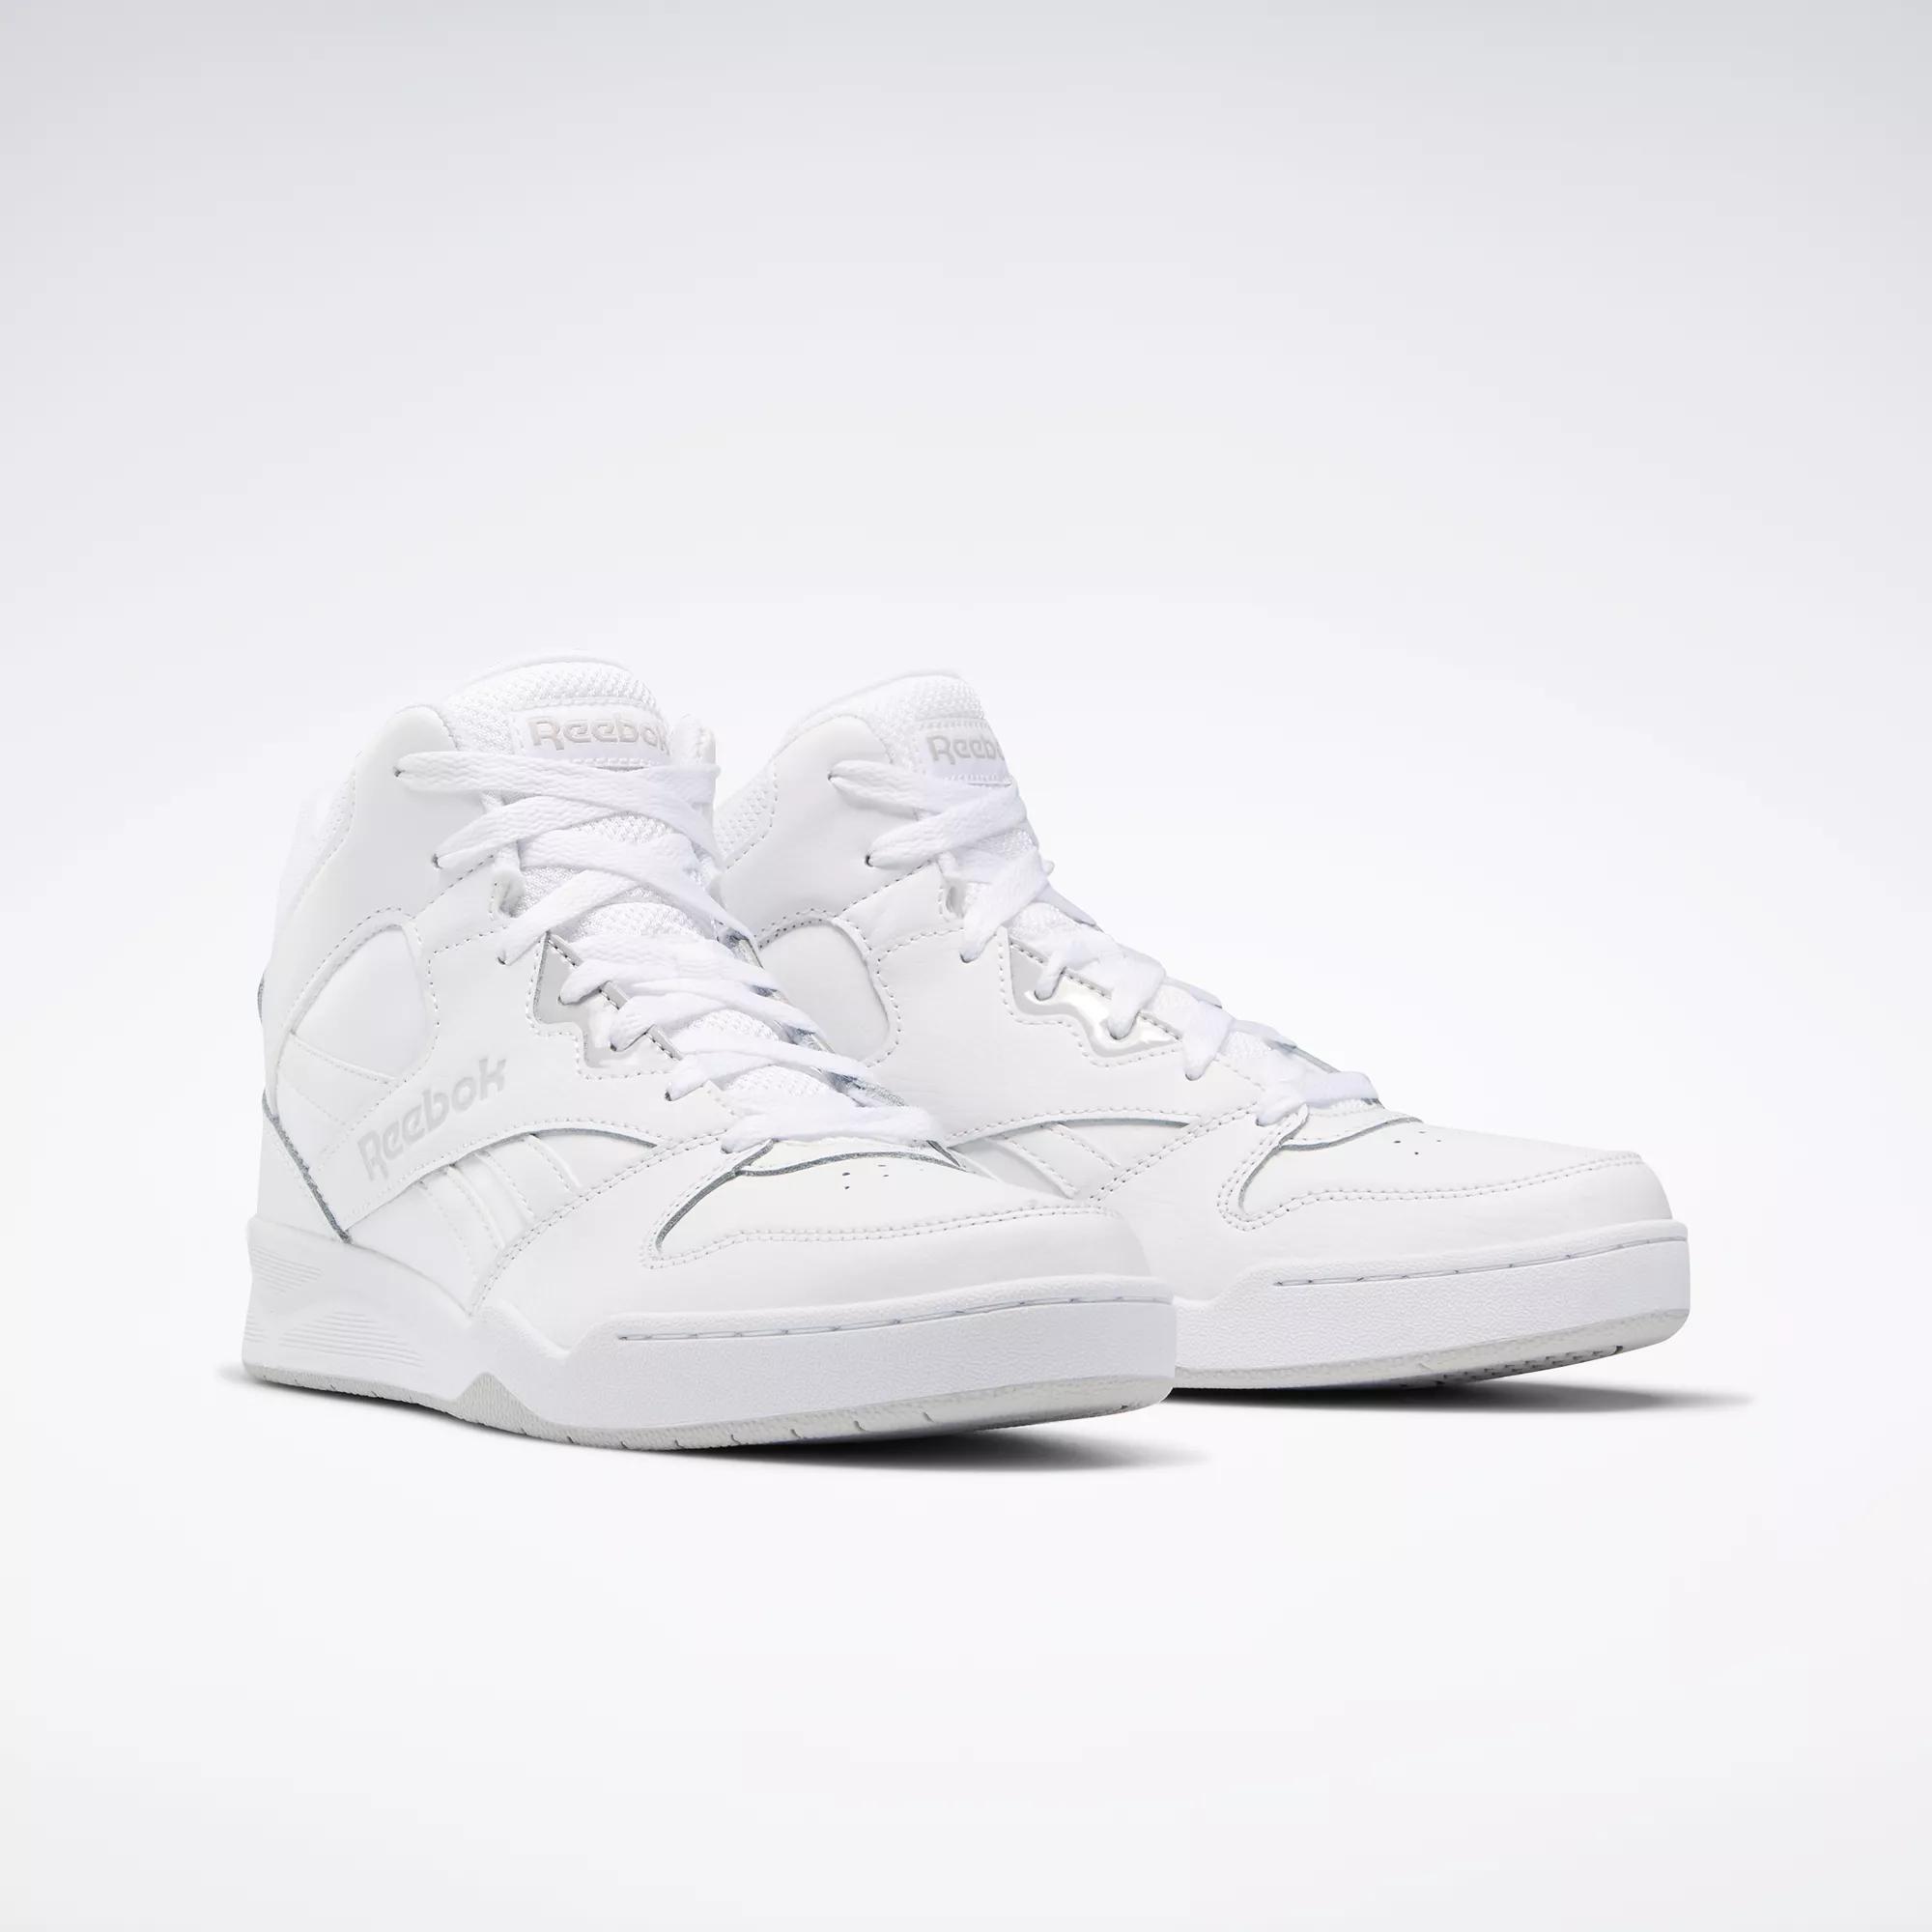 Royal BB4500 Hi 2.0 Shoes - White / Lgh Solid Grey | Reebok